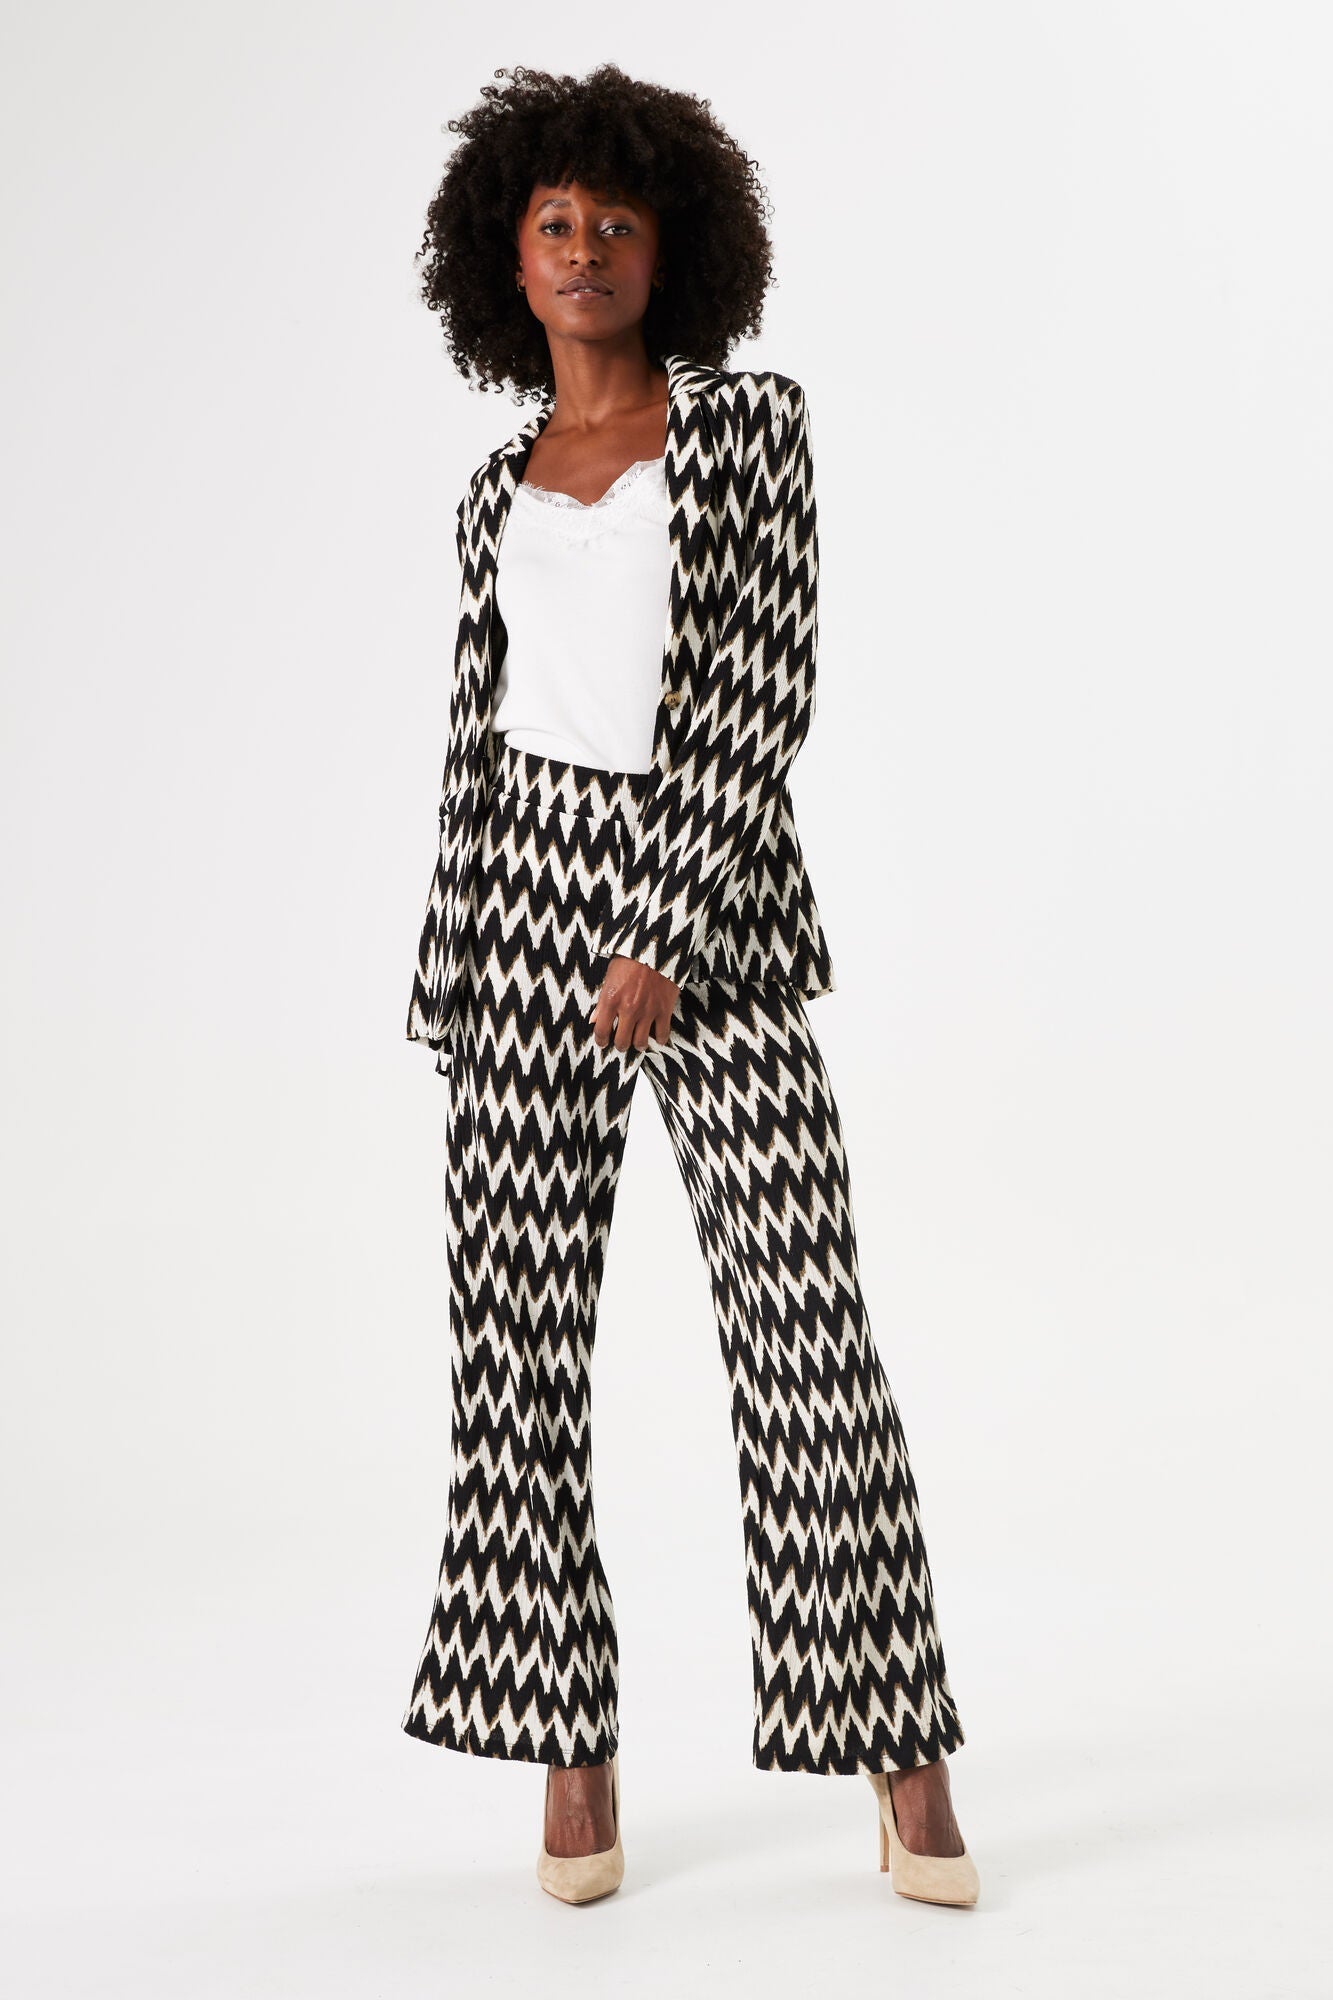 Garcia (O40093) Women's Long Sleeve Black & White Zigzag Printed Blazer with Textured Fabric